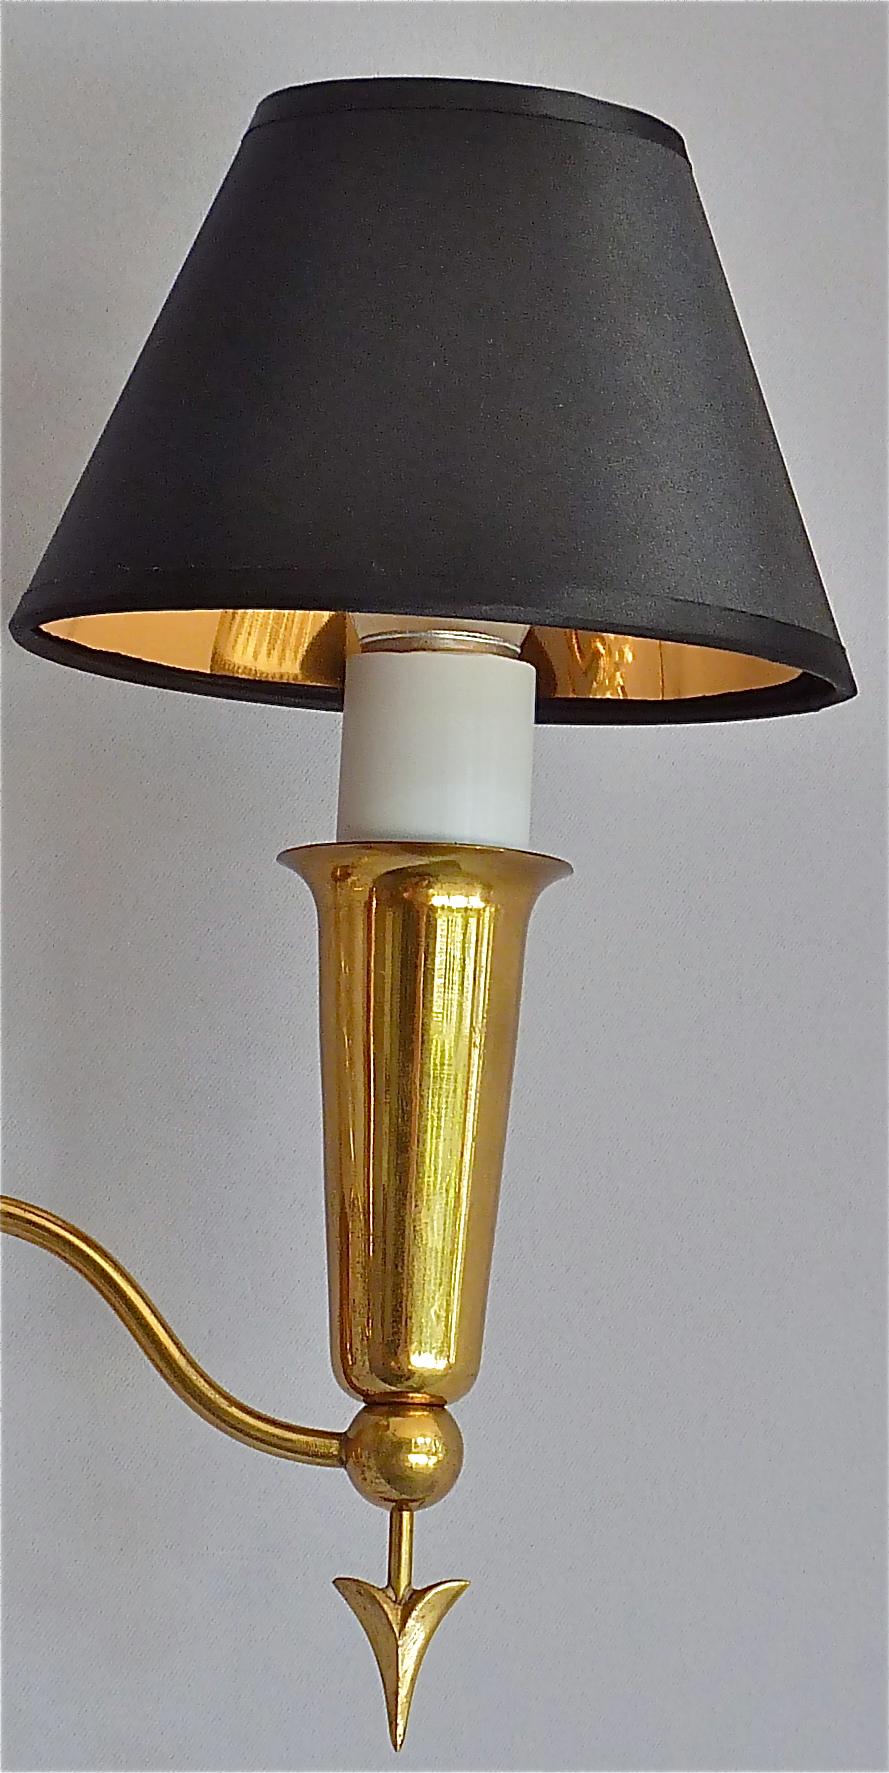 Pair of Maison Arlus Midcentury Sconces Jansen Arrow Brass Lamp, Gio Ponti Style 10